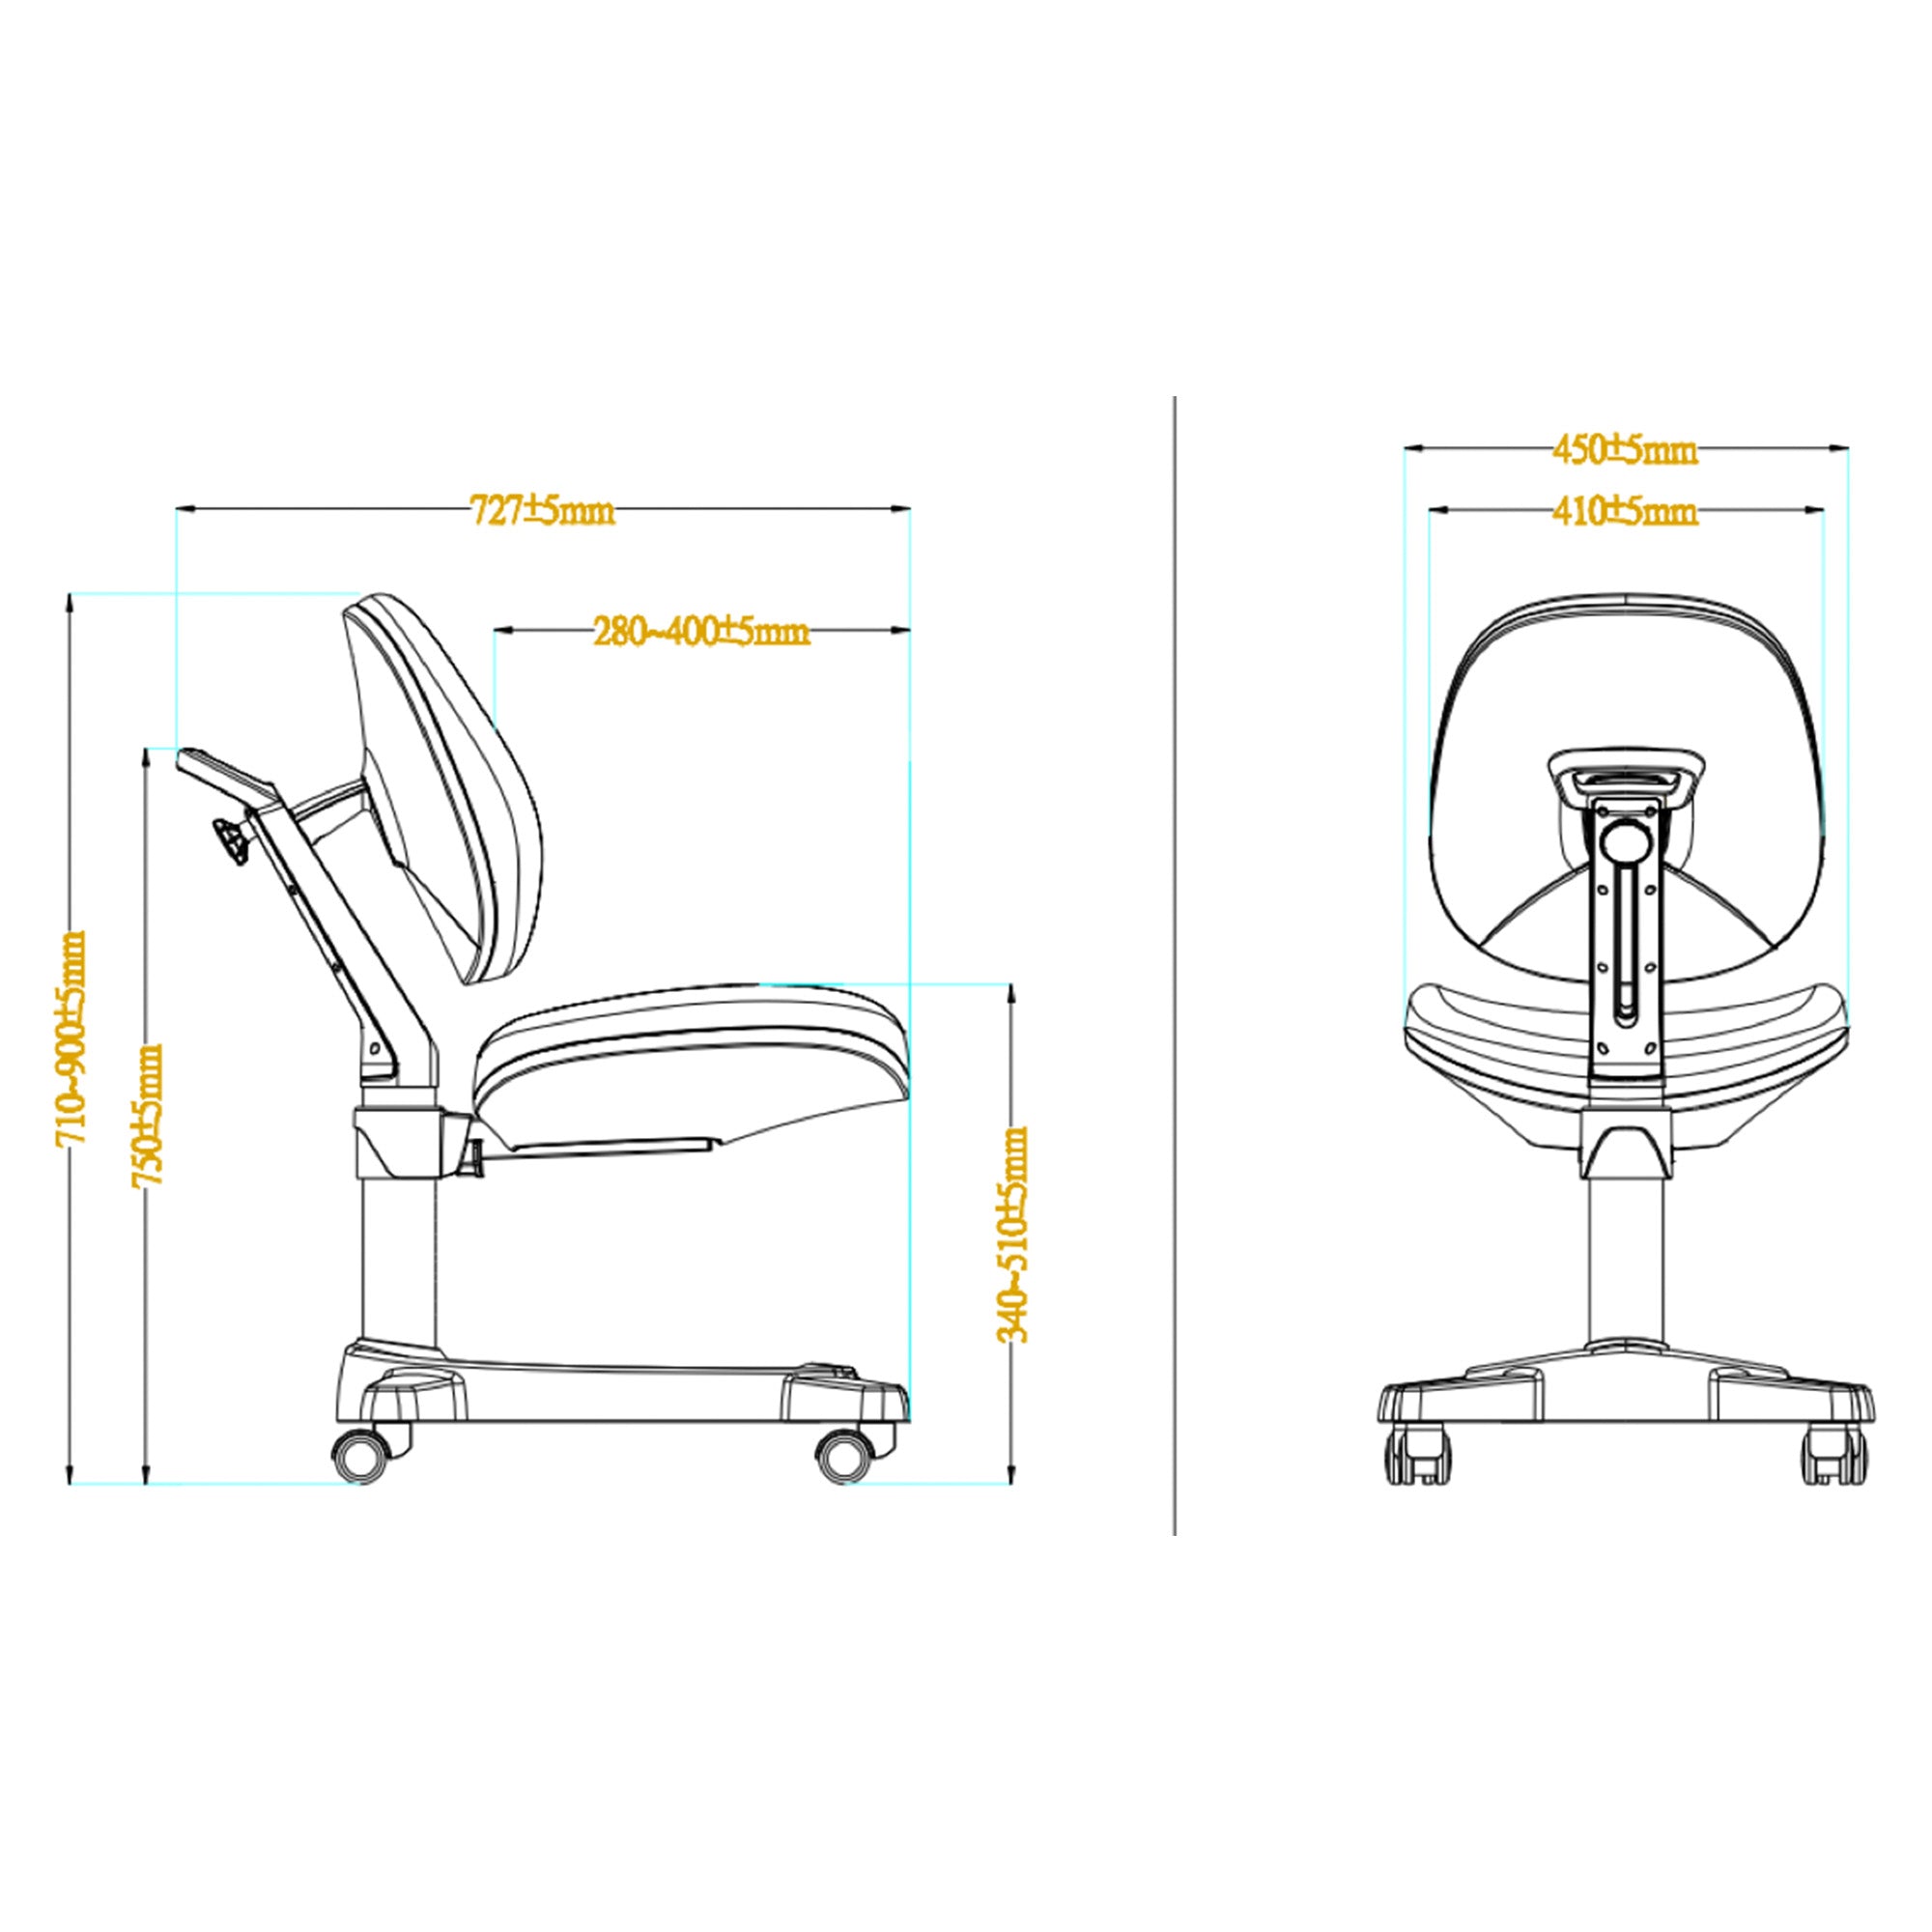 IMPACT - IM-C11-BL - Kids Ergonomic Chair (Blue)